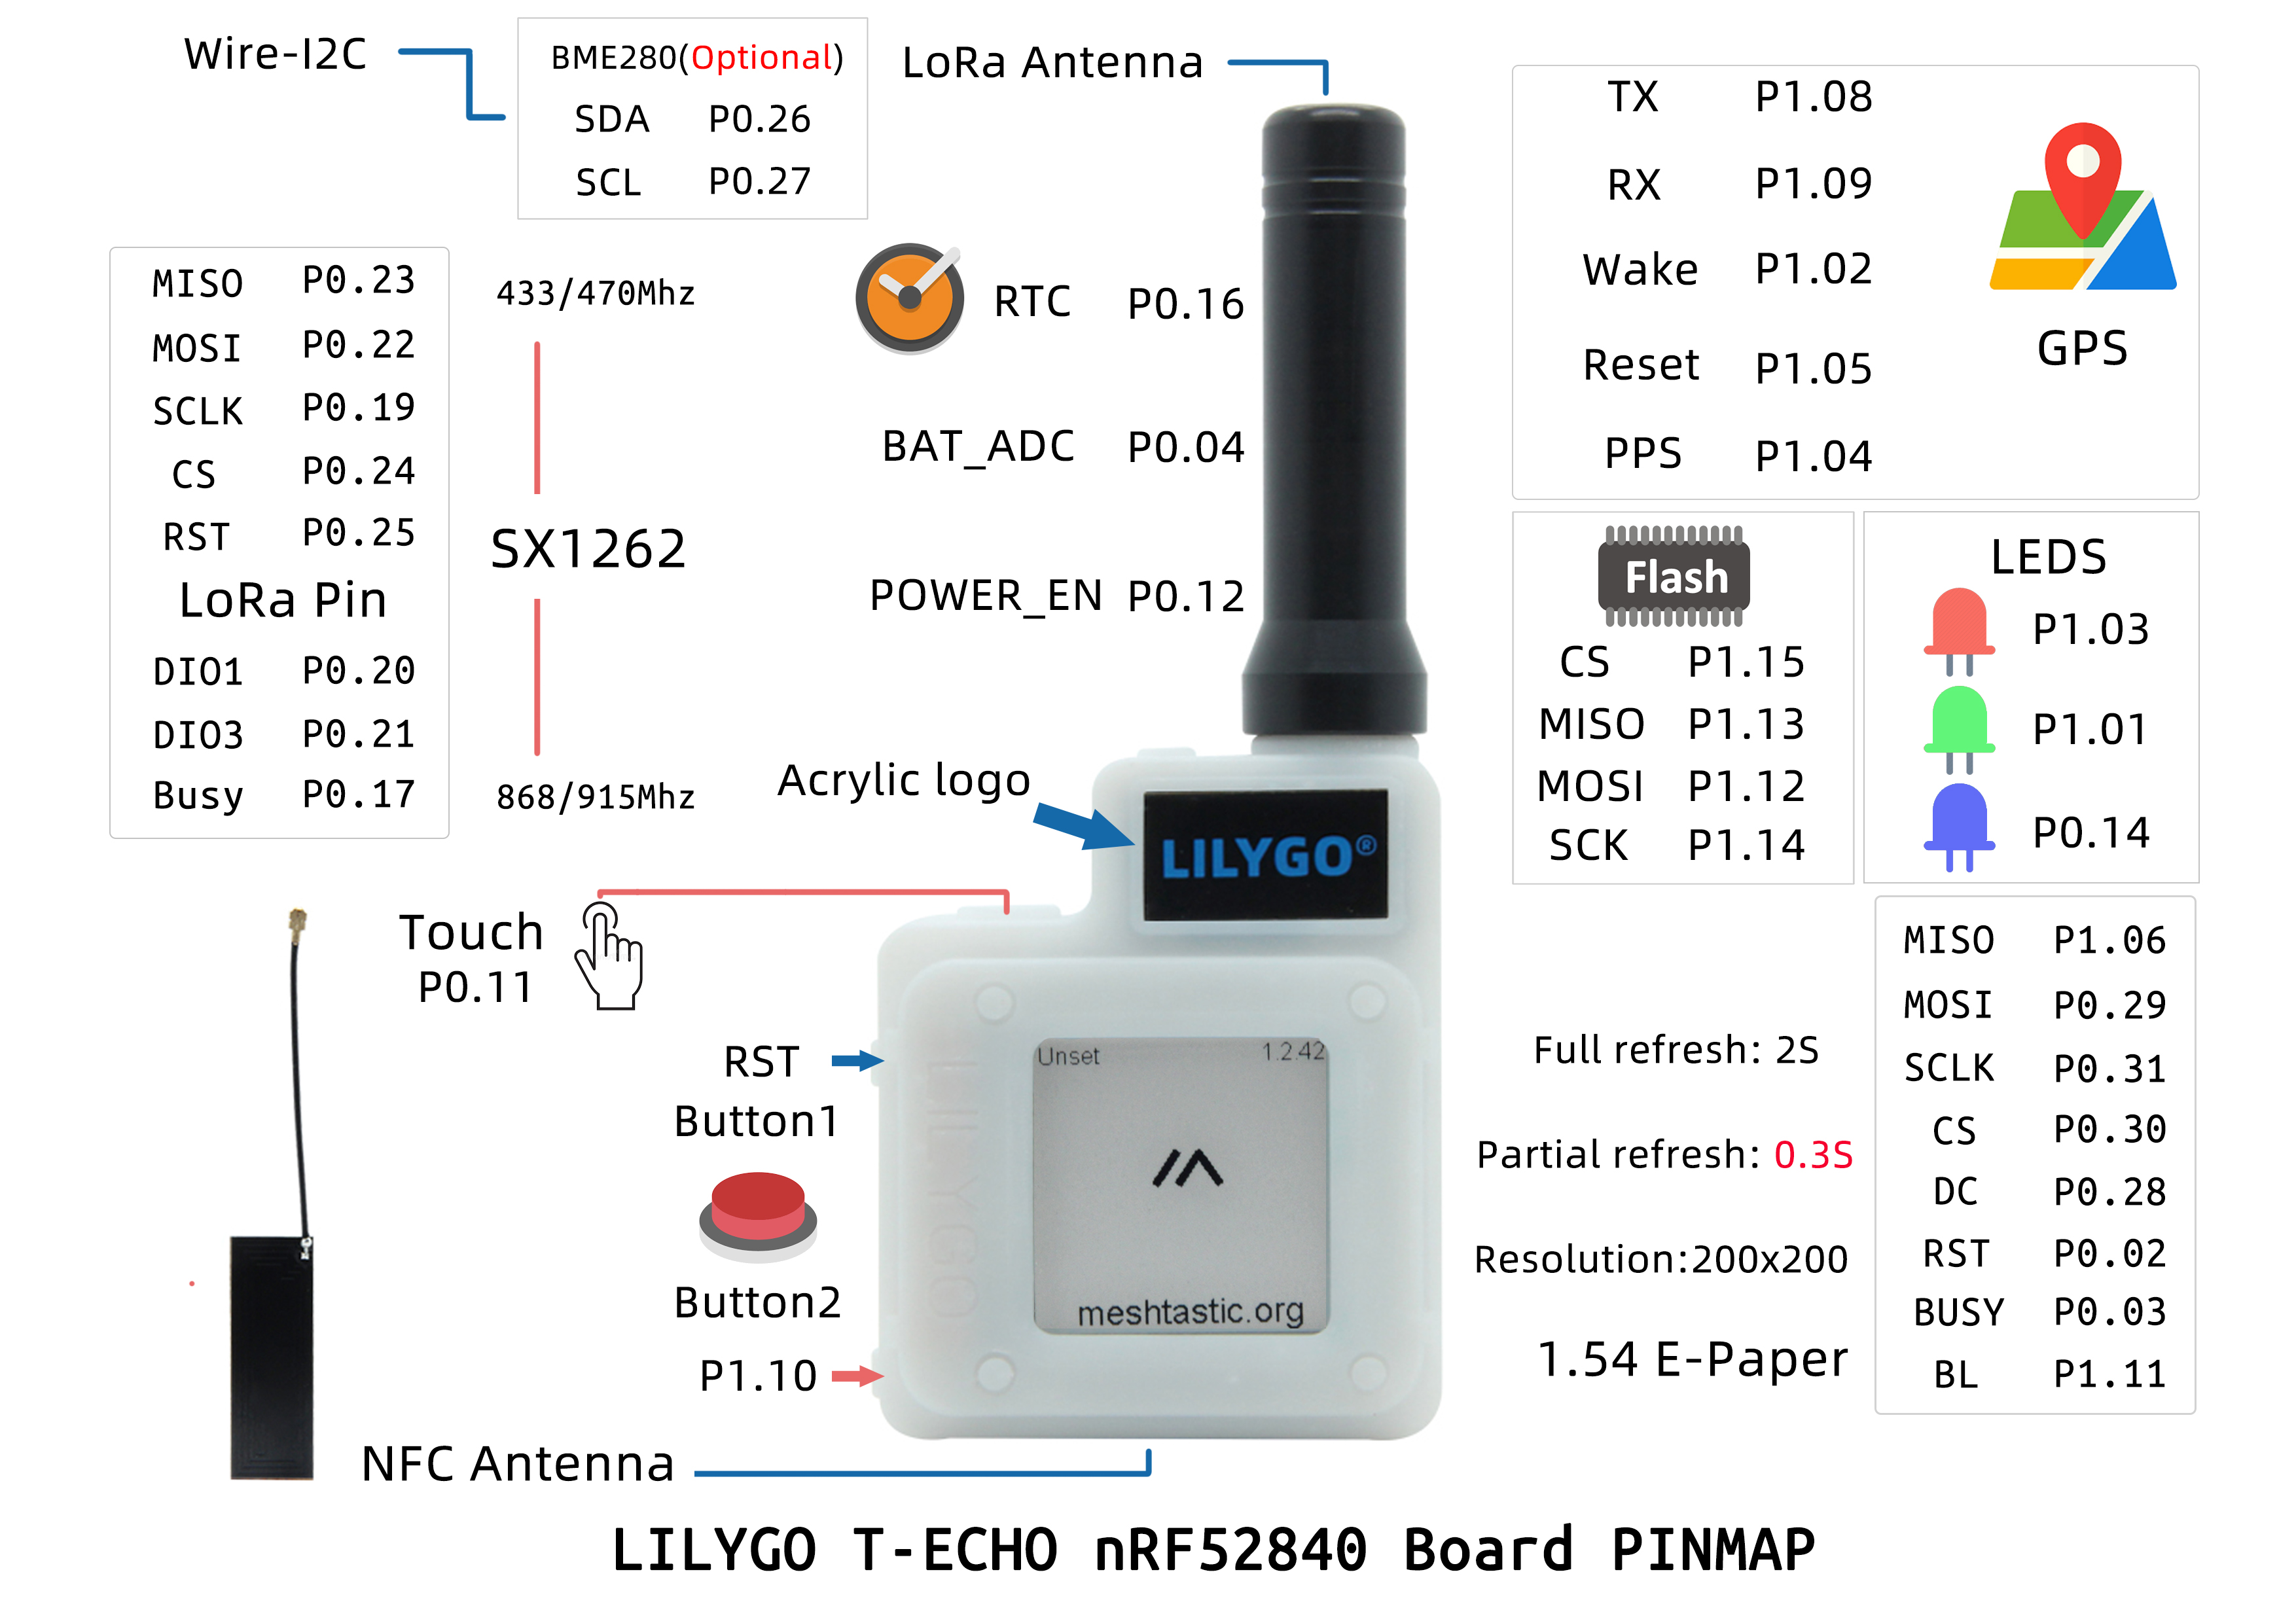 LILYGOregTTGO-T-Echo-SoftRF-Meshtastic-BME280-TEMP-Pressure-Sensor-NRF52840-SX1262-433868915MHz-Modu-1881601-2